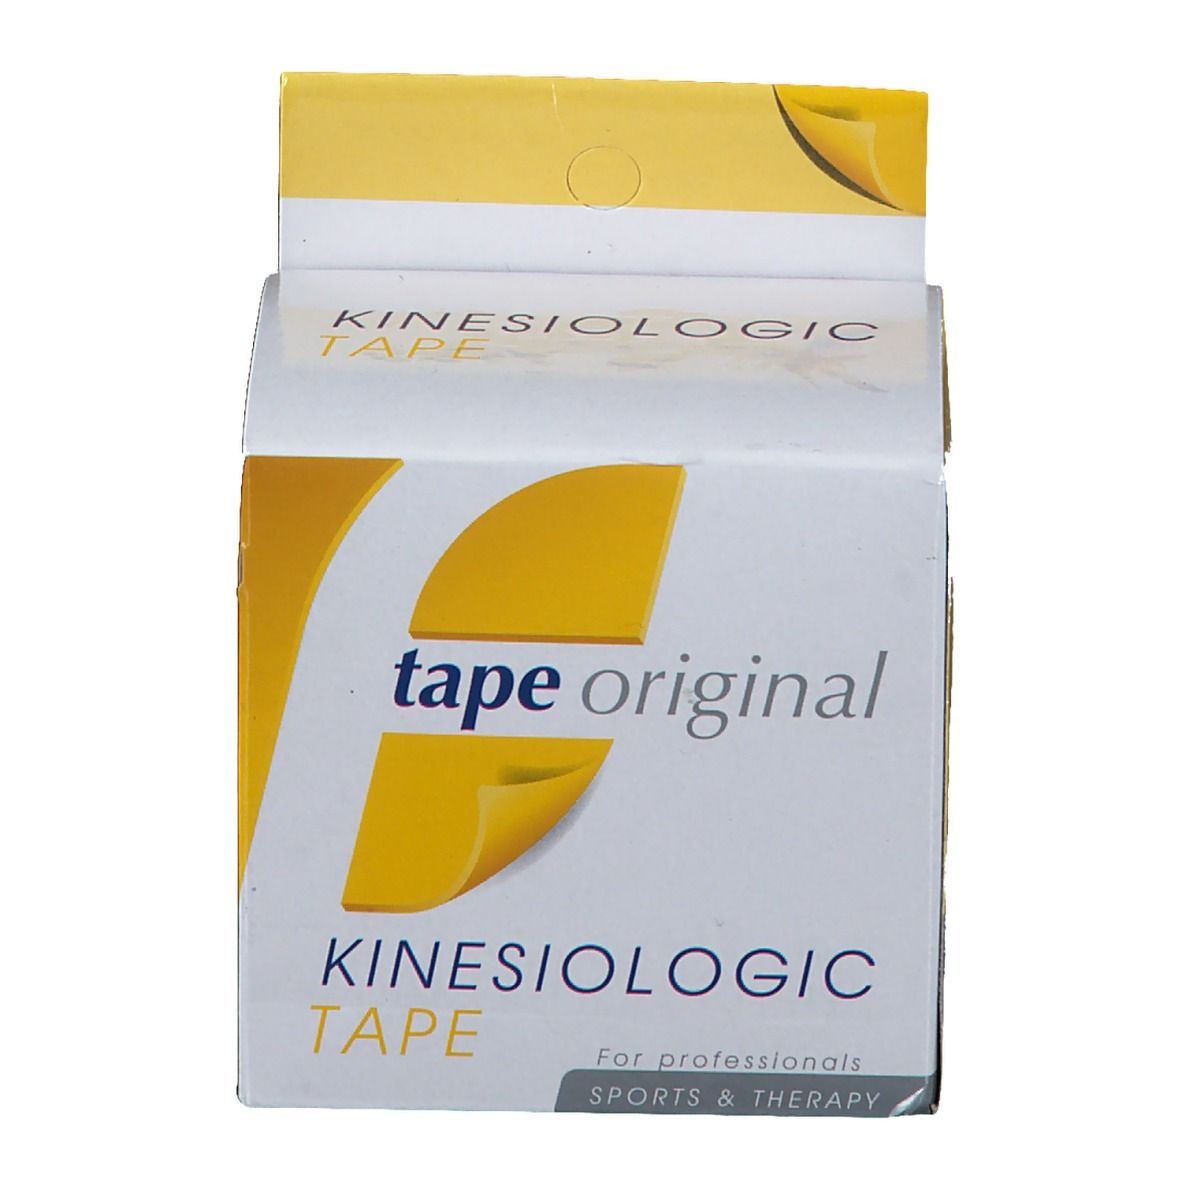 Kinesio tape original Kinesiologic Tape gelb 5 cm x 5 m